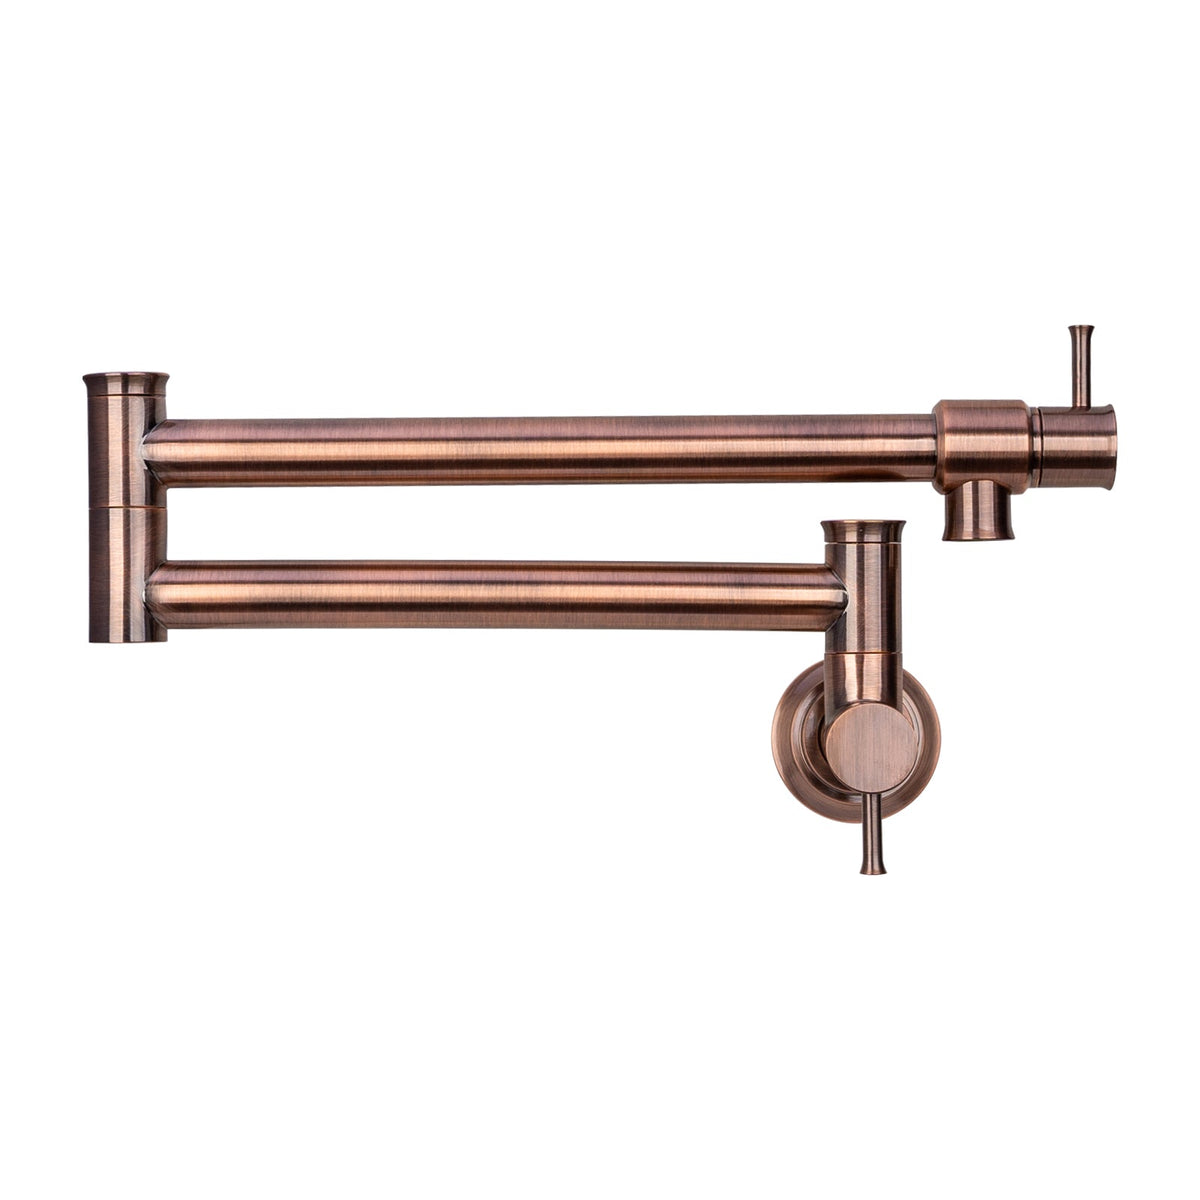 Antique Copper Pot Filler Kitchen Faucet Wall-Mounted - AK98266-AC